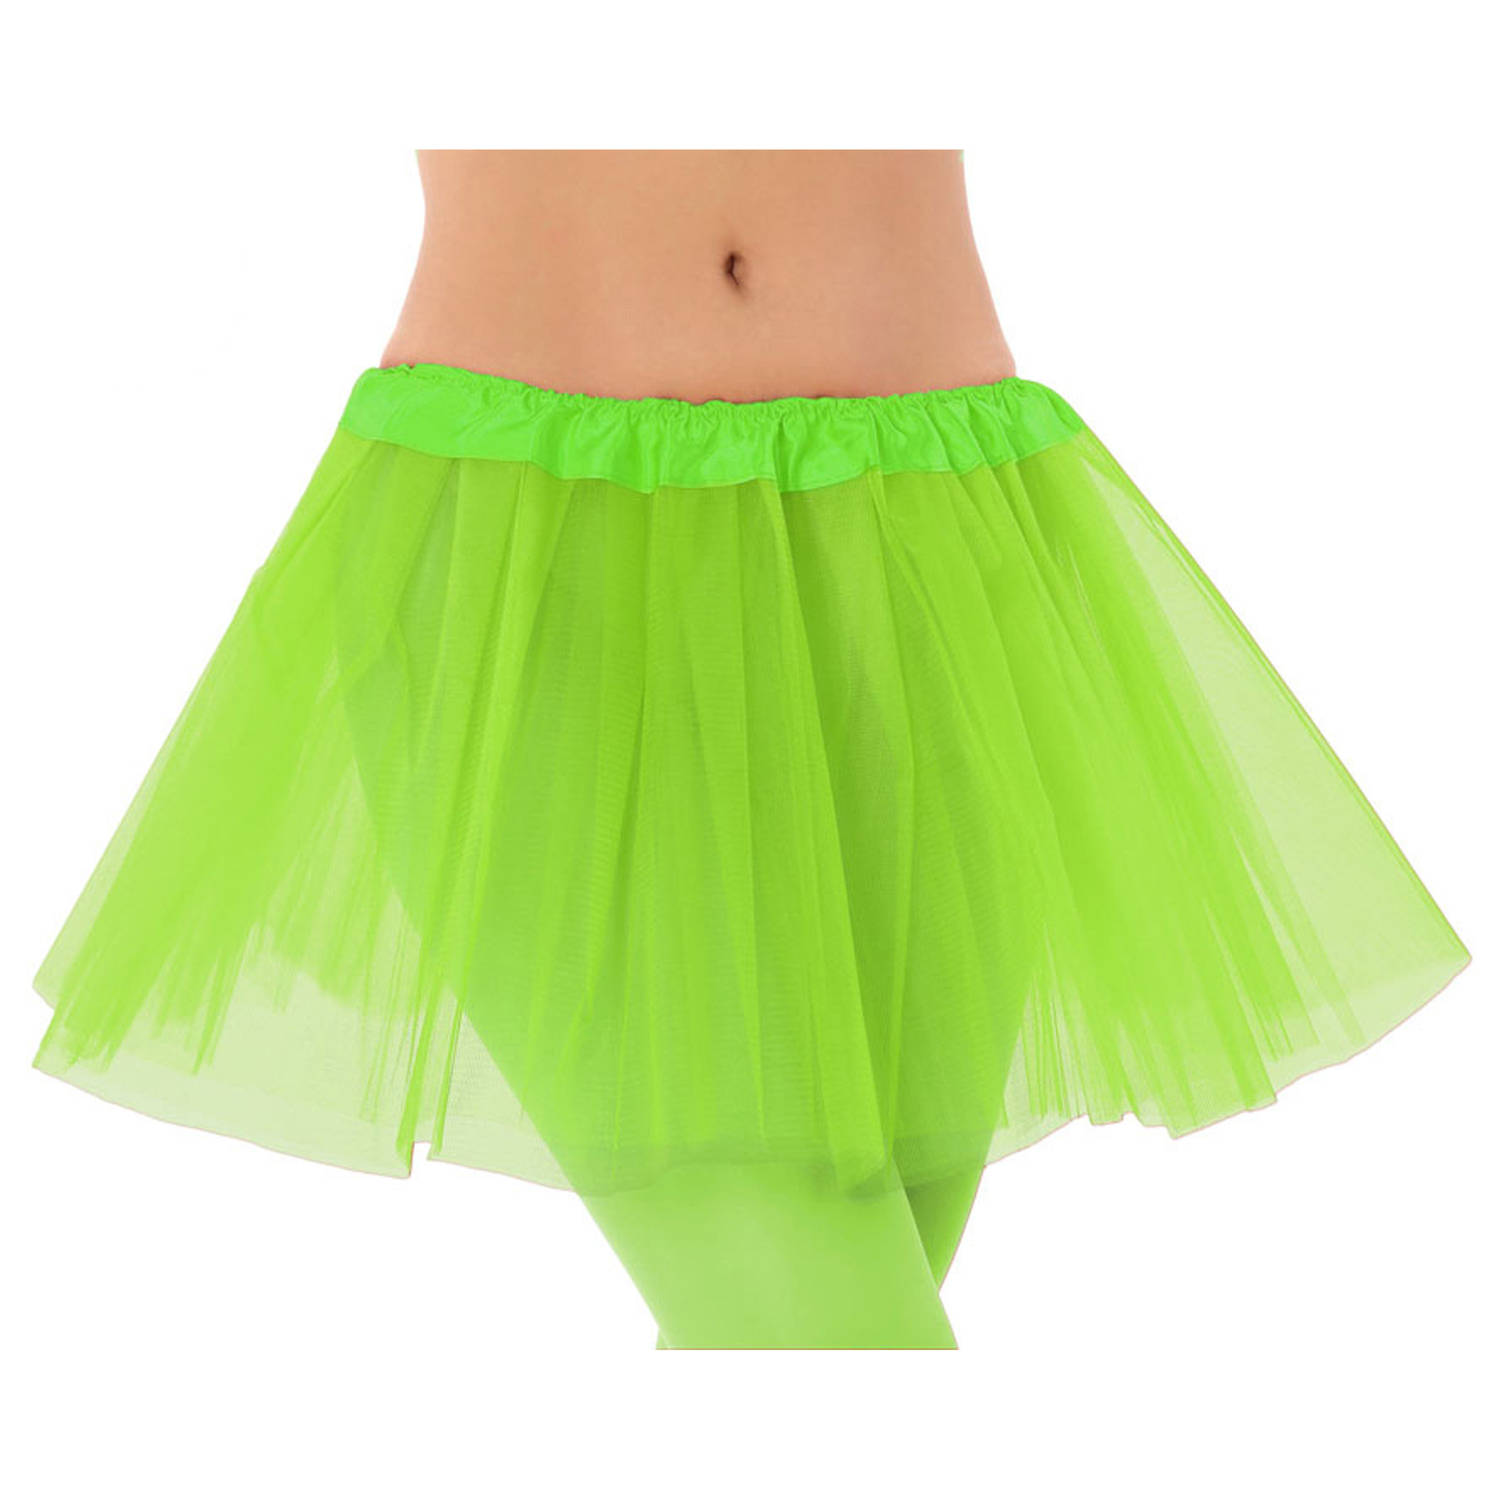 Dames verkleed rokje/tutu - tule stof met elastiek - fluor groen - one size - Carnavalskostuums